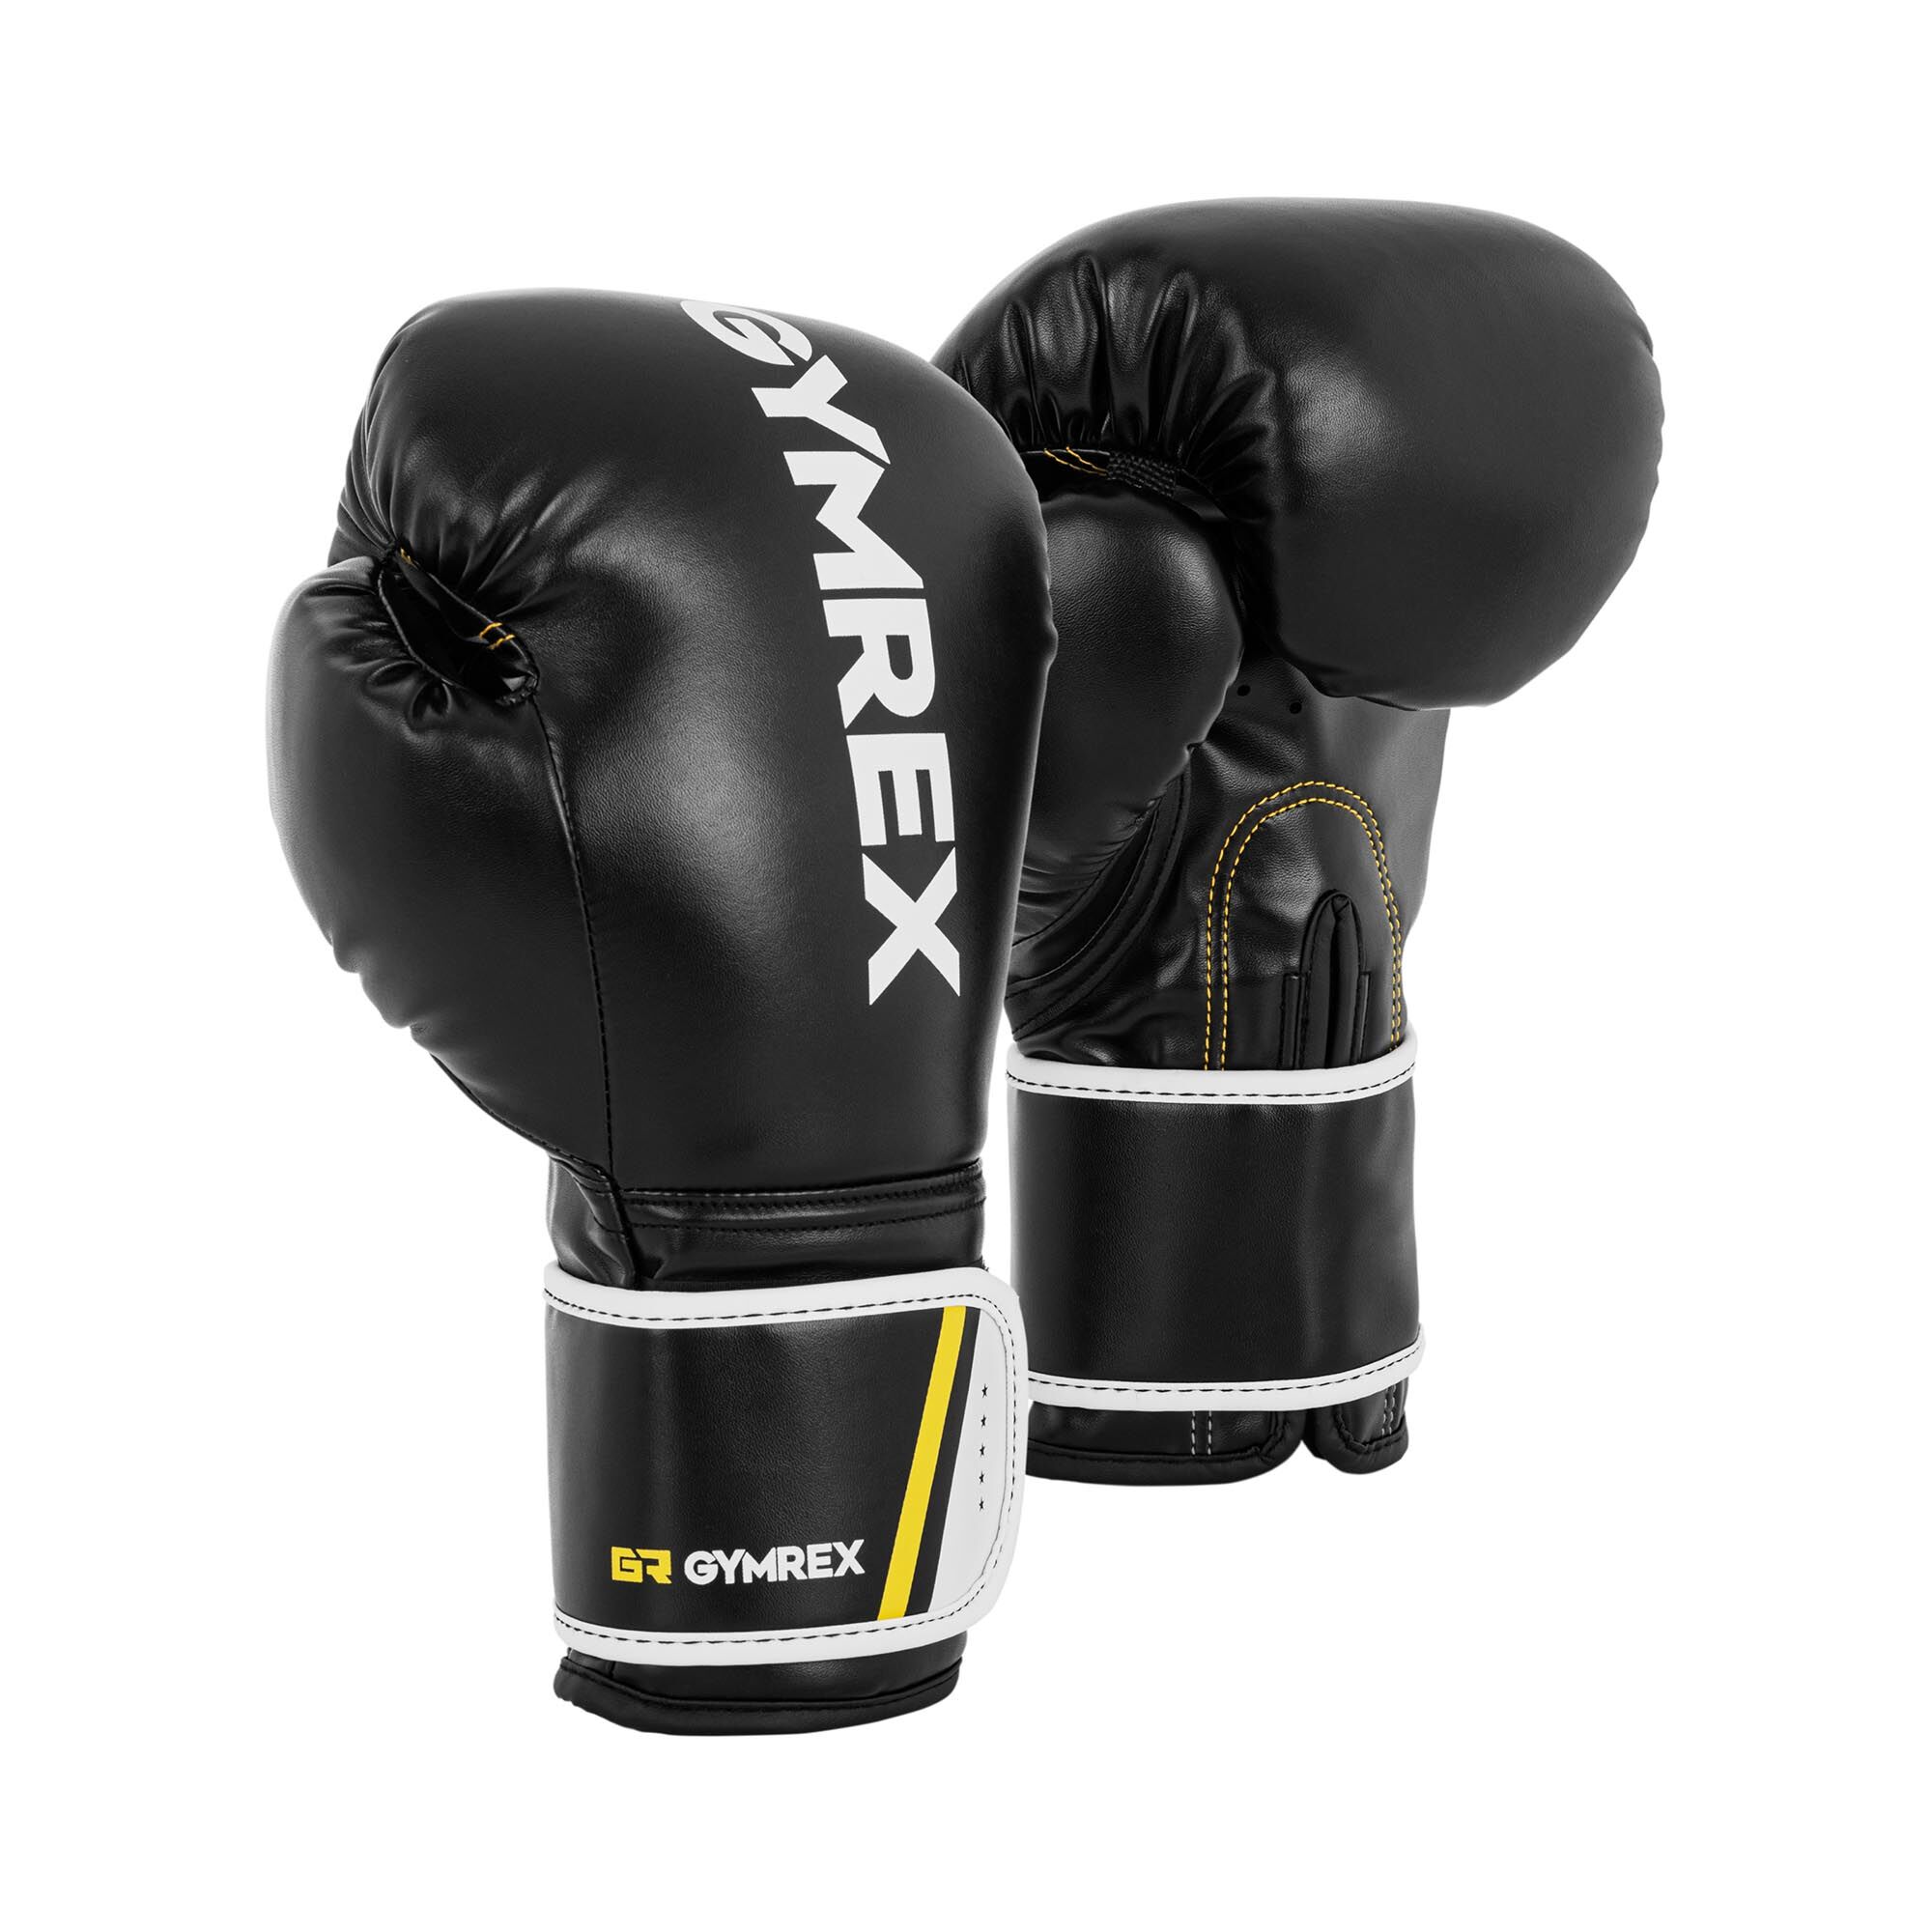 Gymrex Boxing Gloves - 10 oz - black